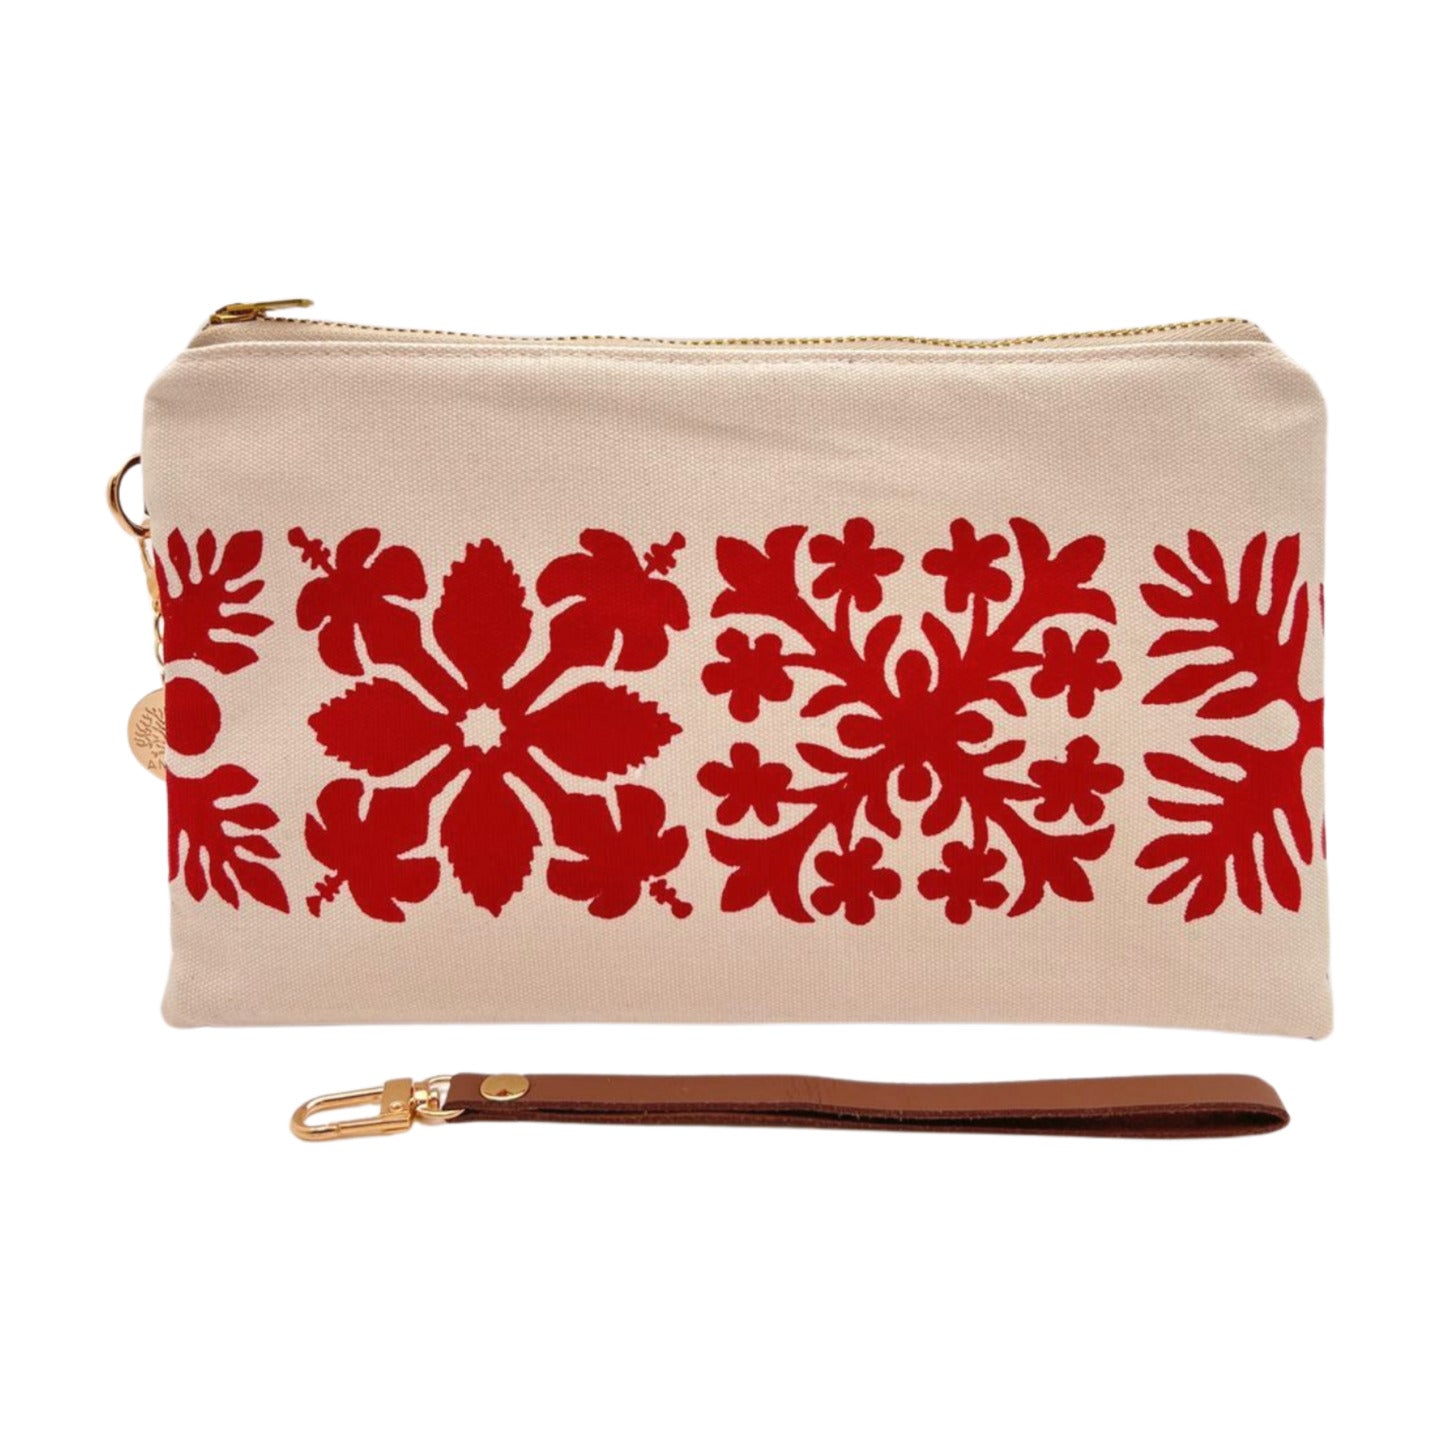 Pop-Up Mākeke - A Maui Day Original Handbags - Handprinted Small Handbag - Red Quilt on Canvas - Front View - Strap Off